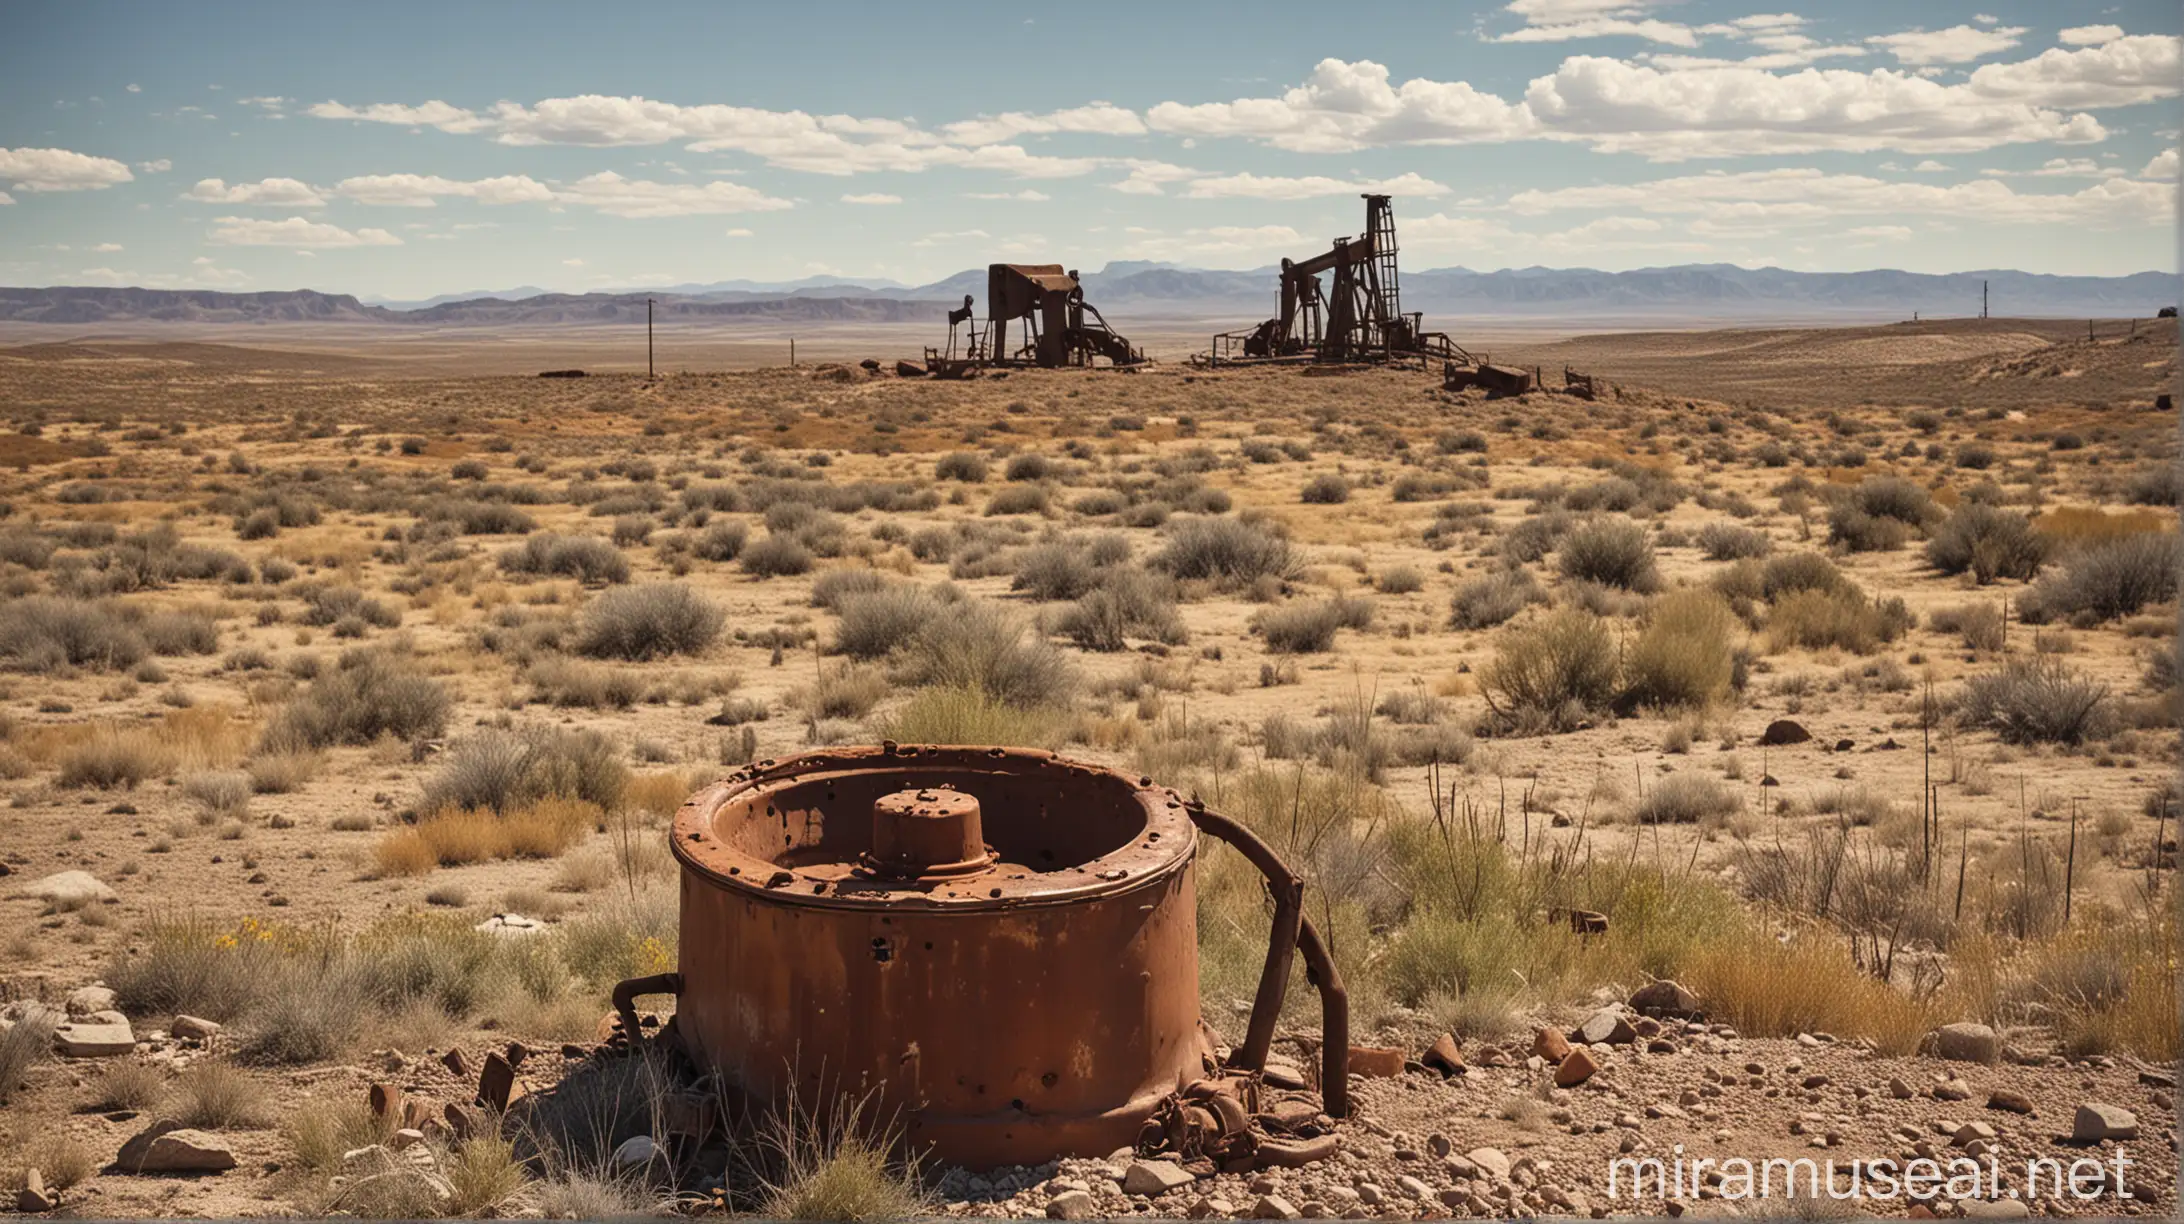 Rusty Abandoned Oil Well Cap in Western US Landscape